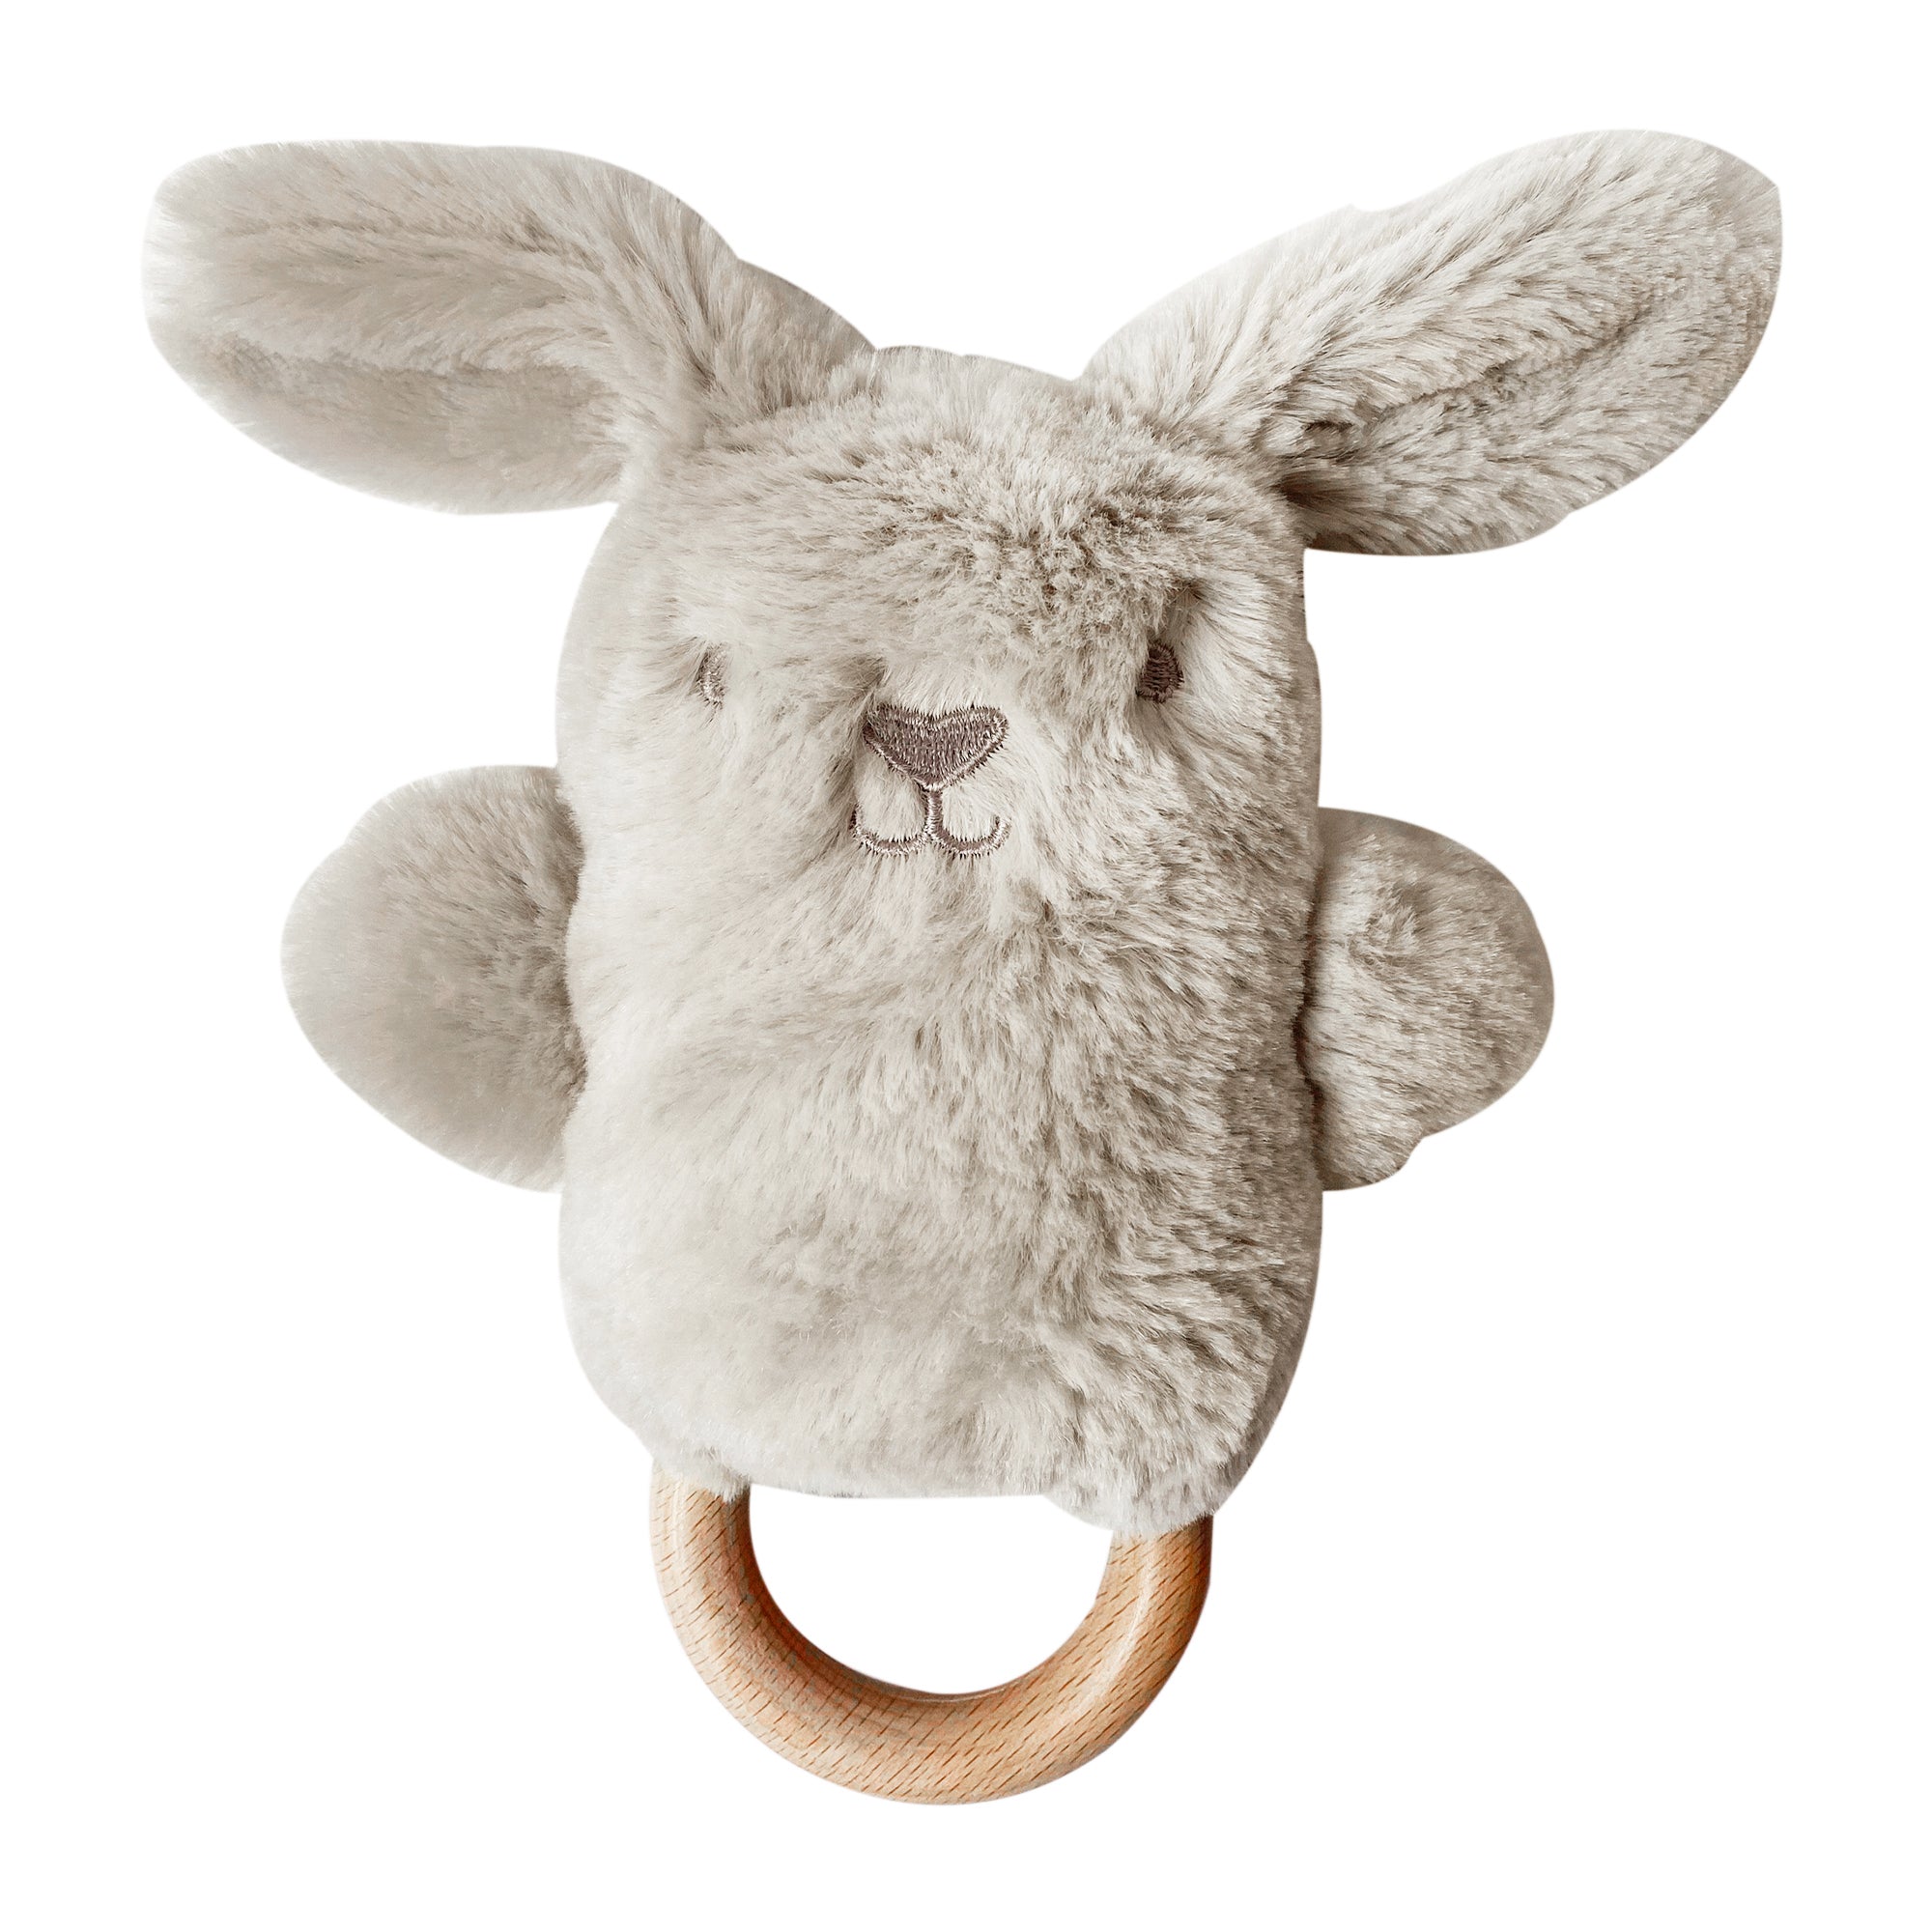 OB Designs Soft Rattle Toy - Ziggy Bunny